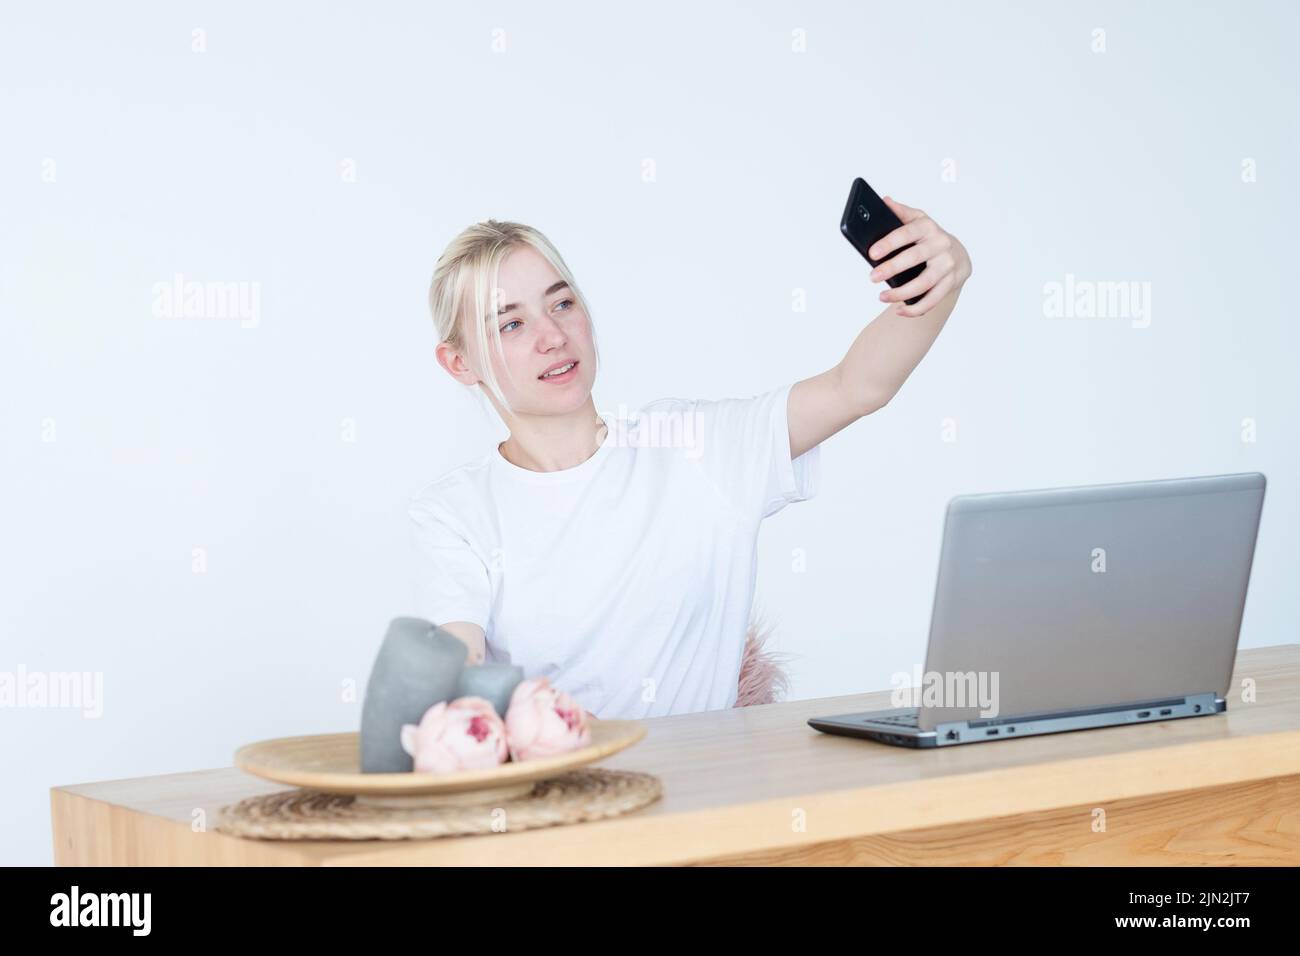 woman selfie blogging addiction lifestyle hobby Stock Photo